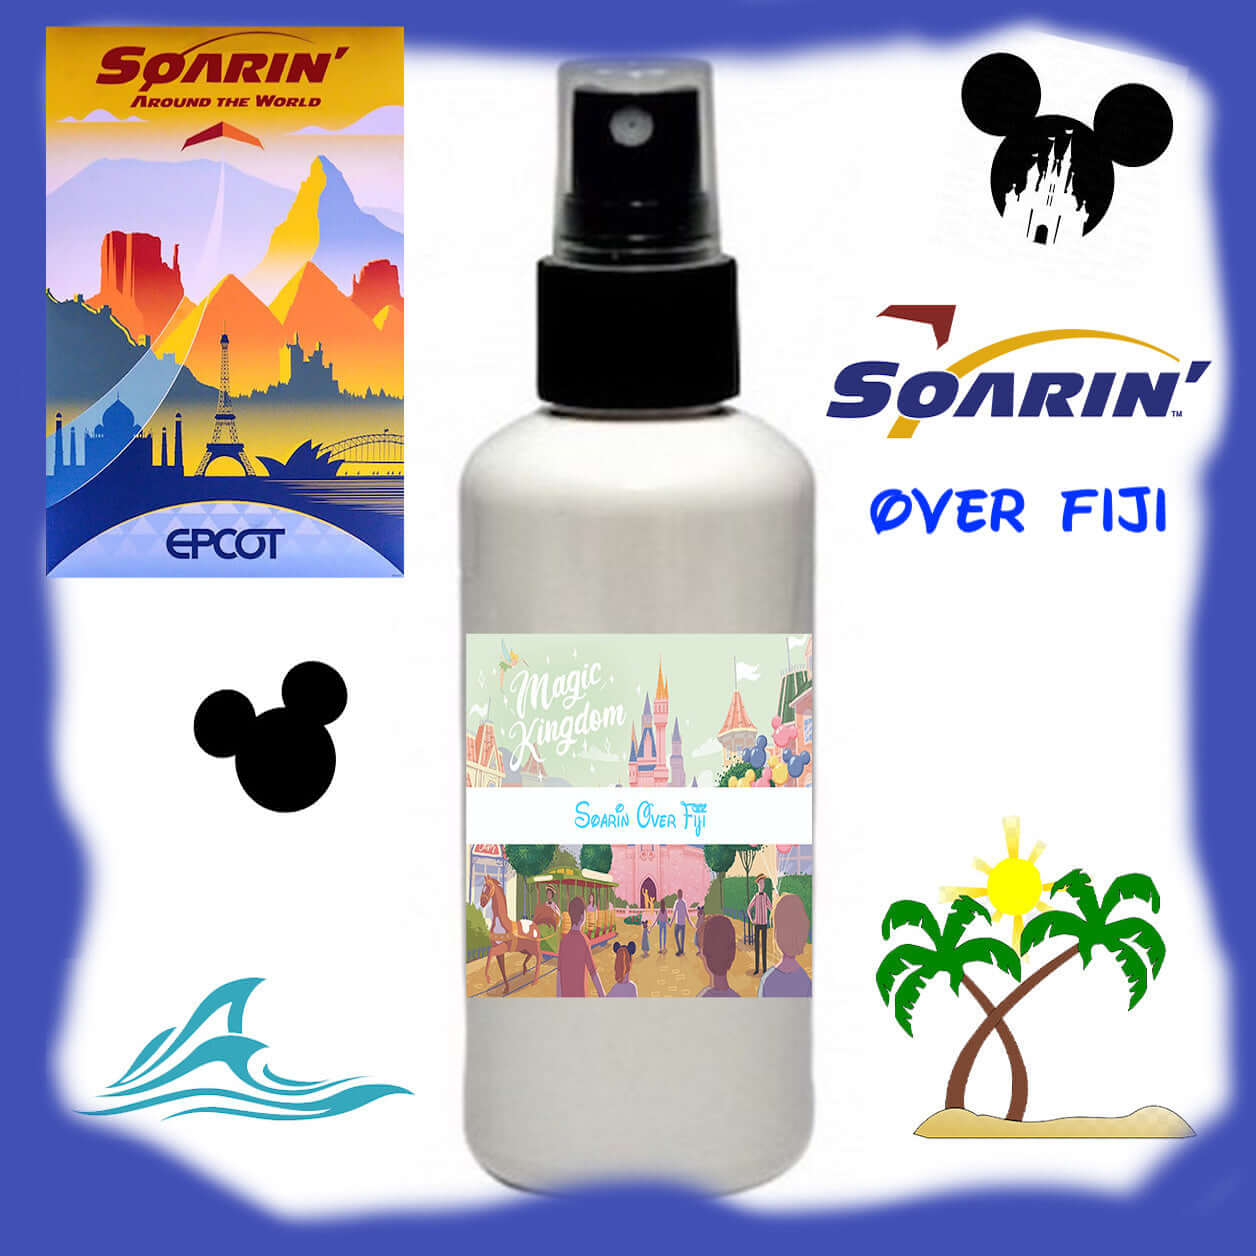 Soarin Over Fiji Fragrance Spray Bottle...